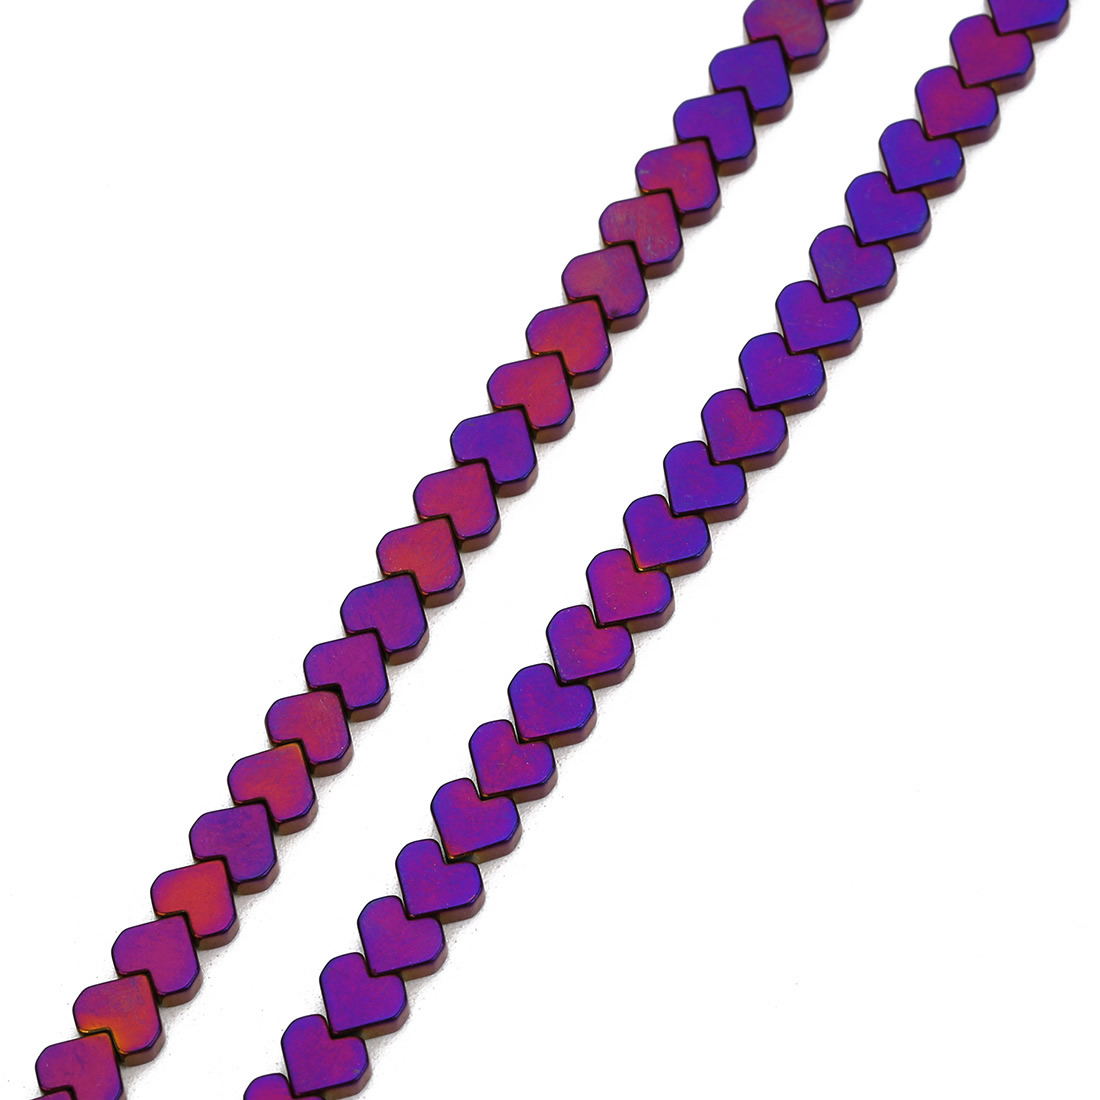 7 purple